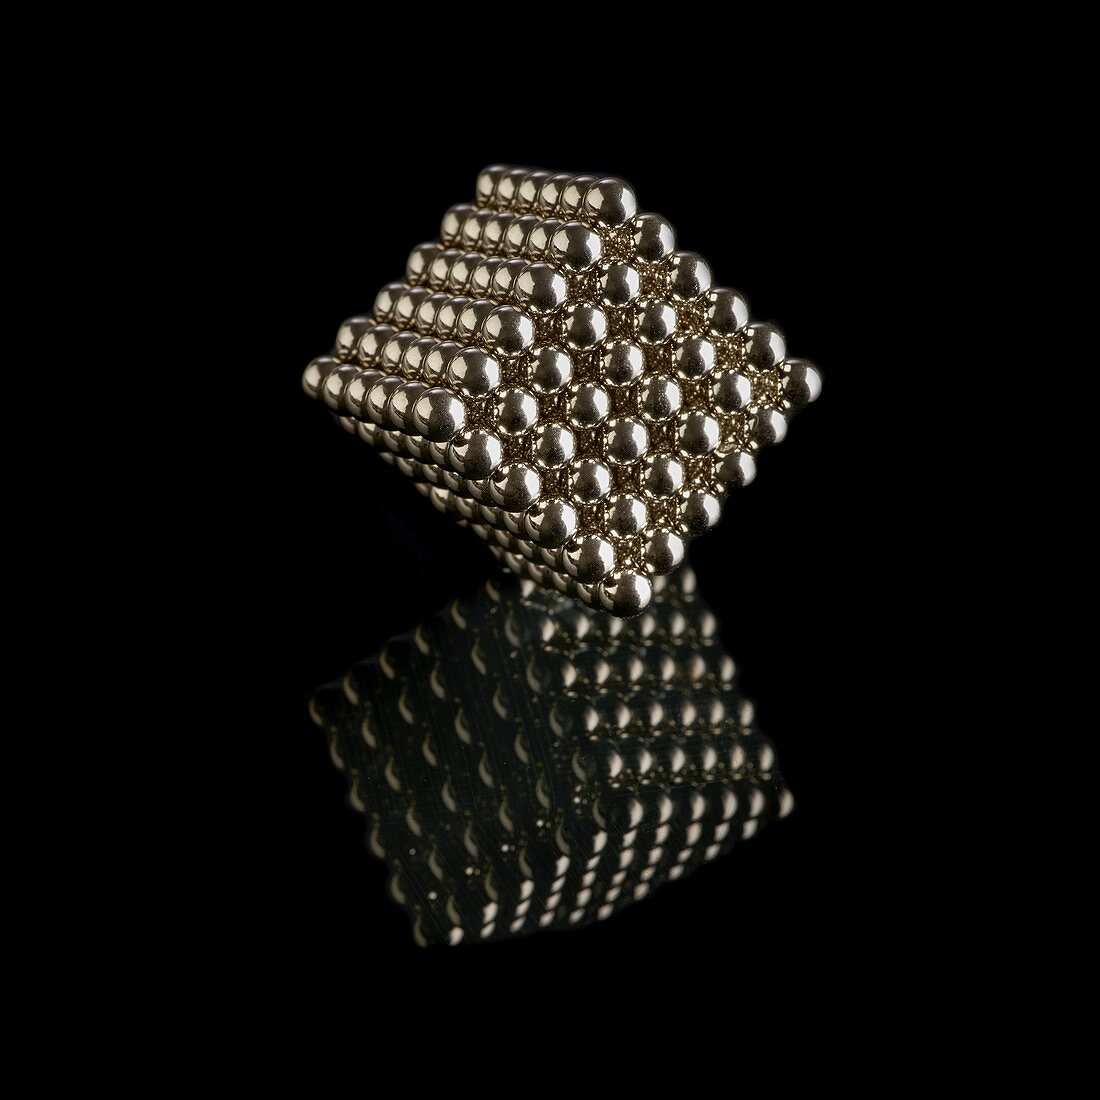 Cube of neodymium magnets